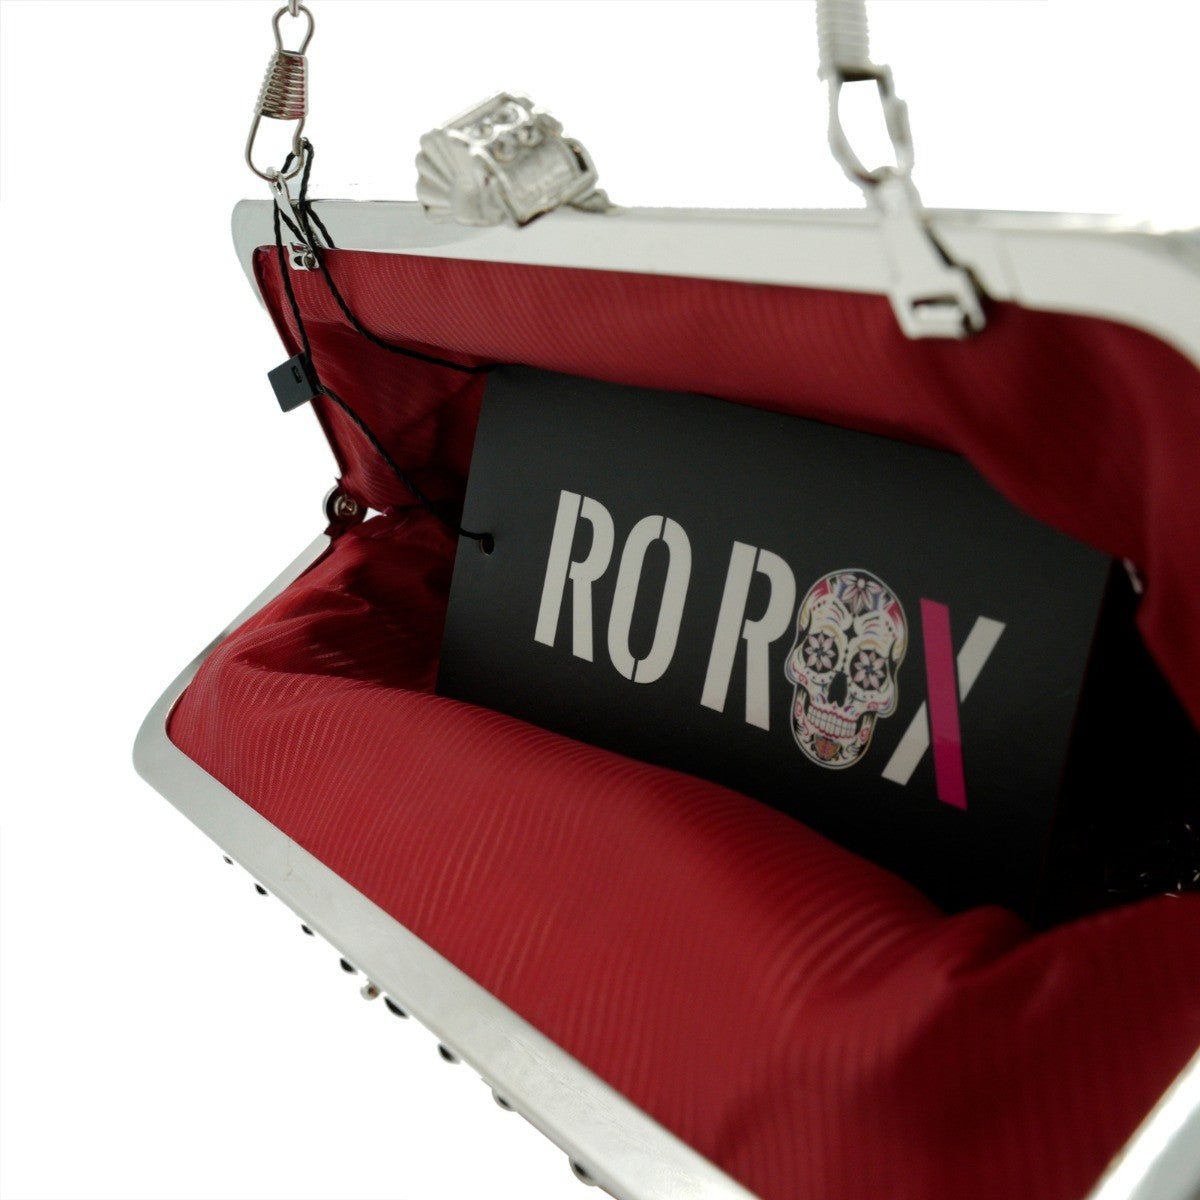 Ro Rox Lottie Satin Pleated Antique Clasp Clutch Evening Bag